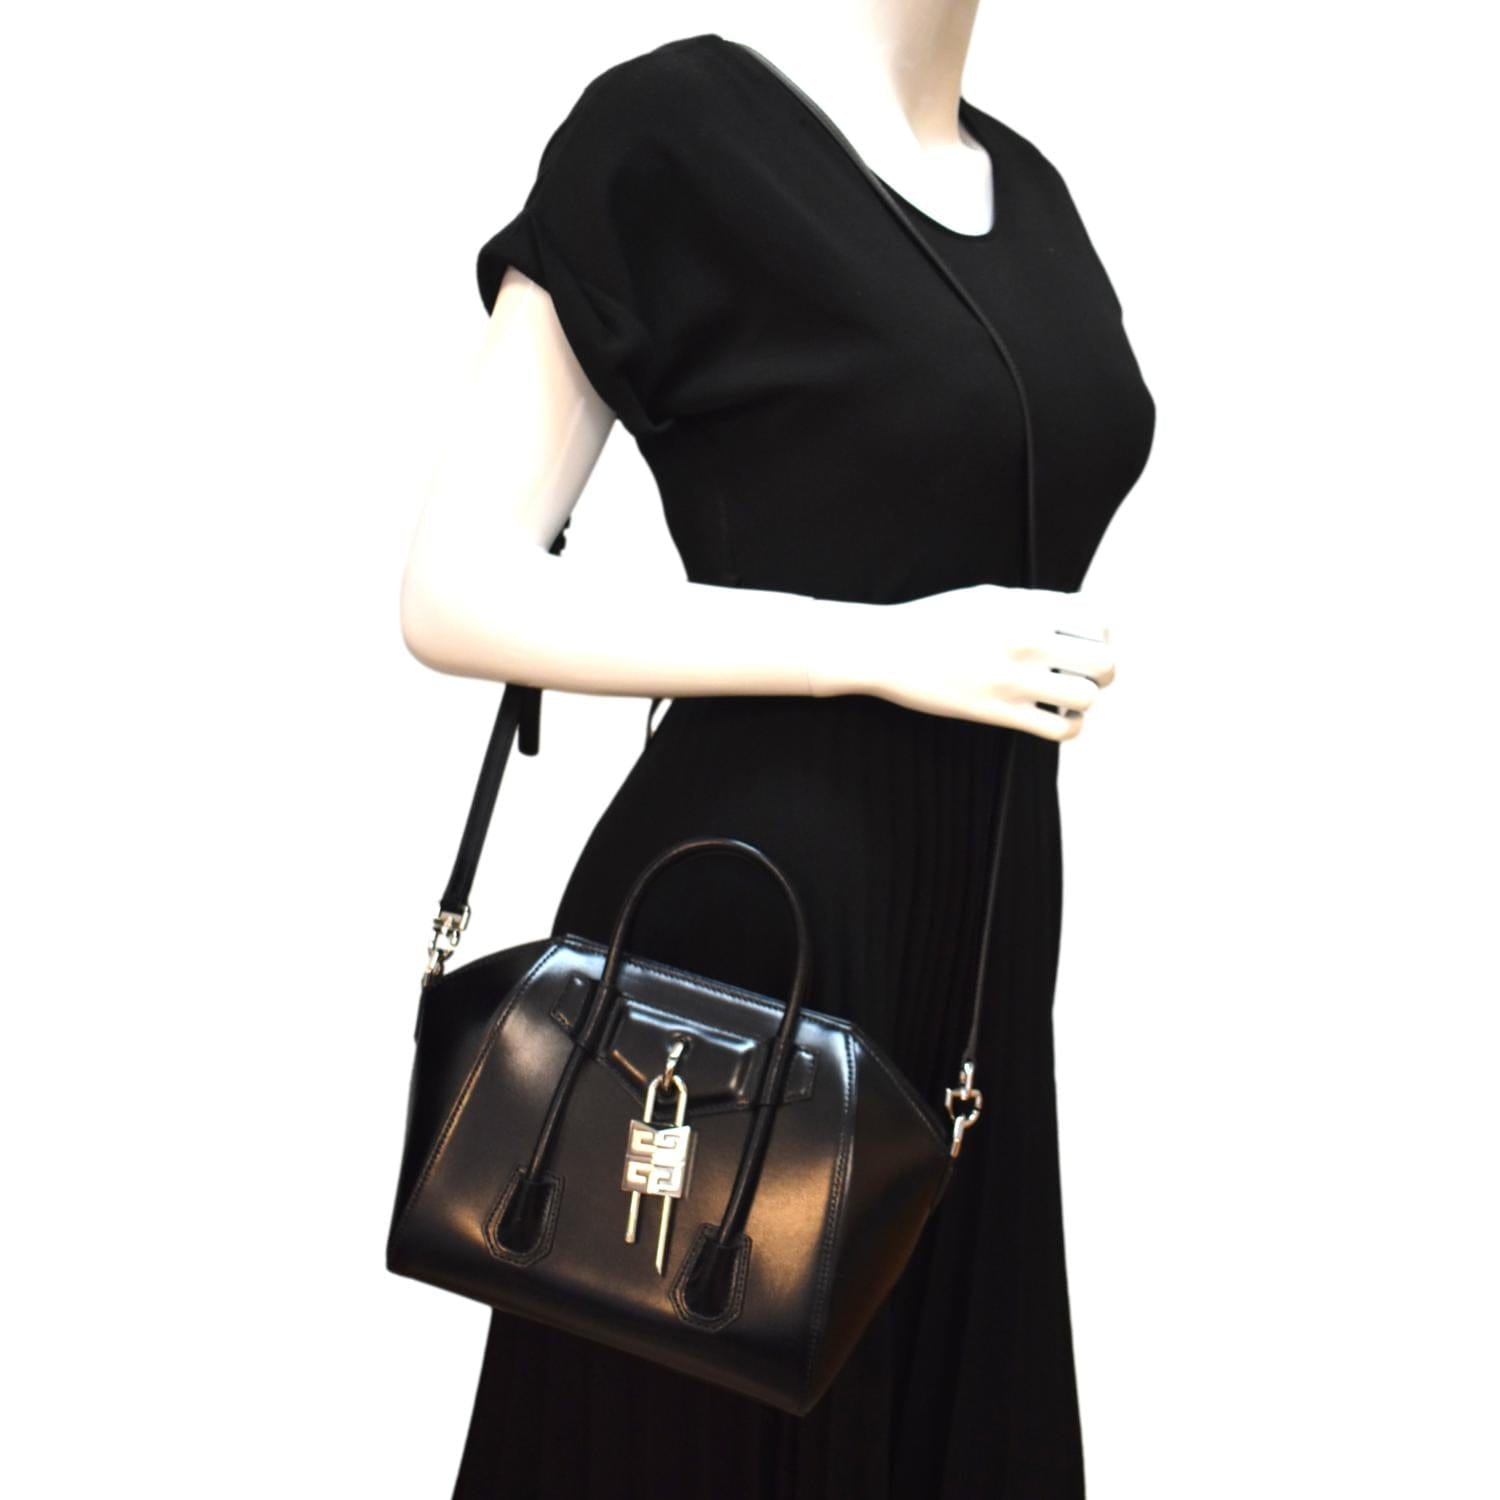 Givenchy - Mini Antigona Bag in Box Leather